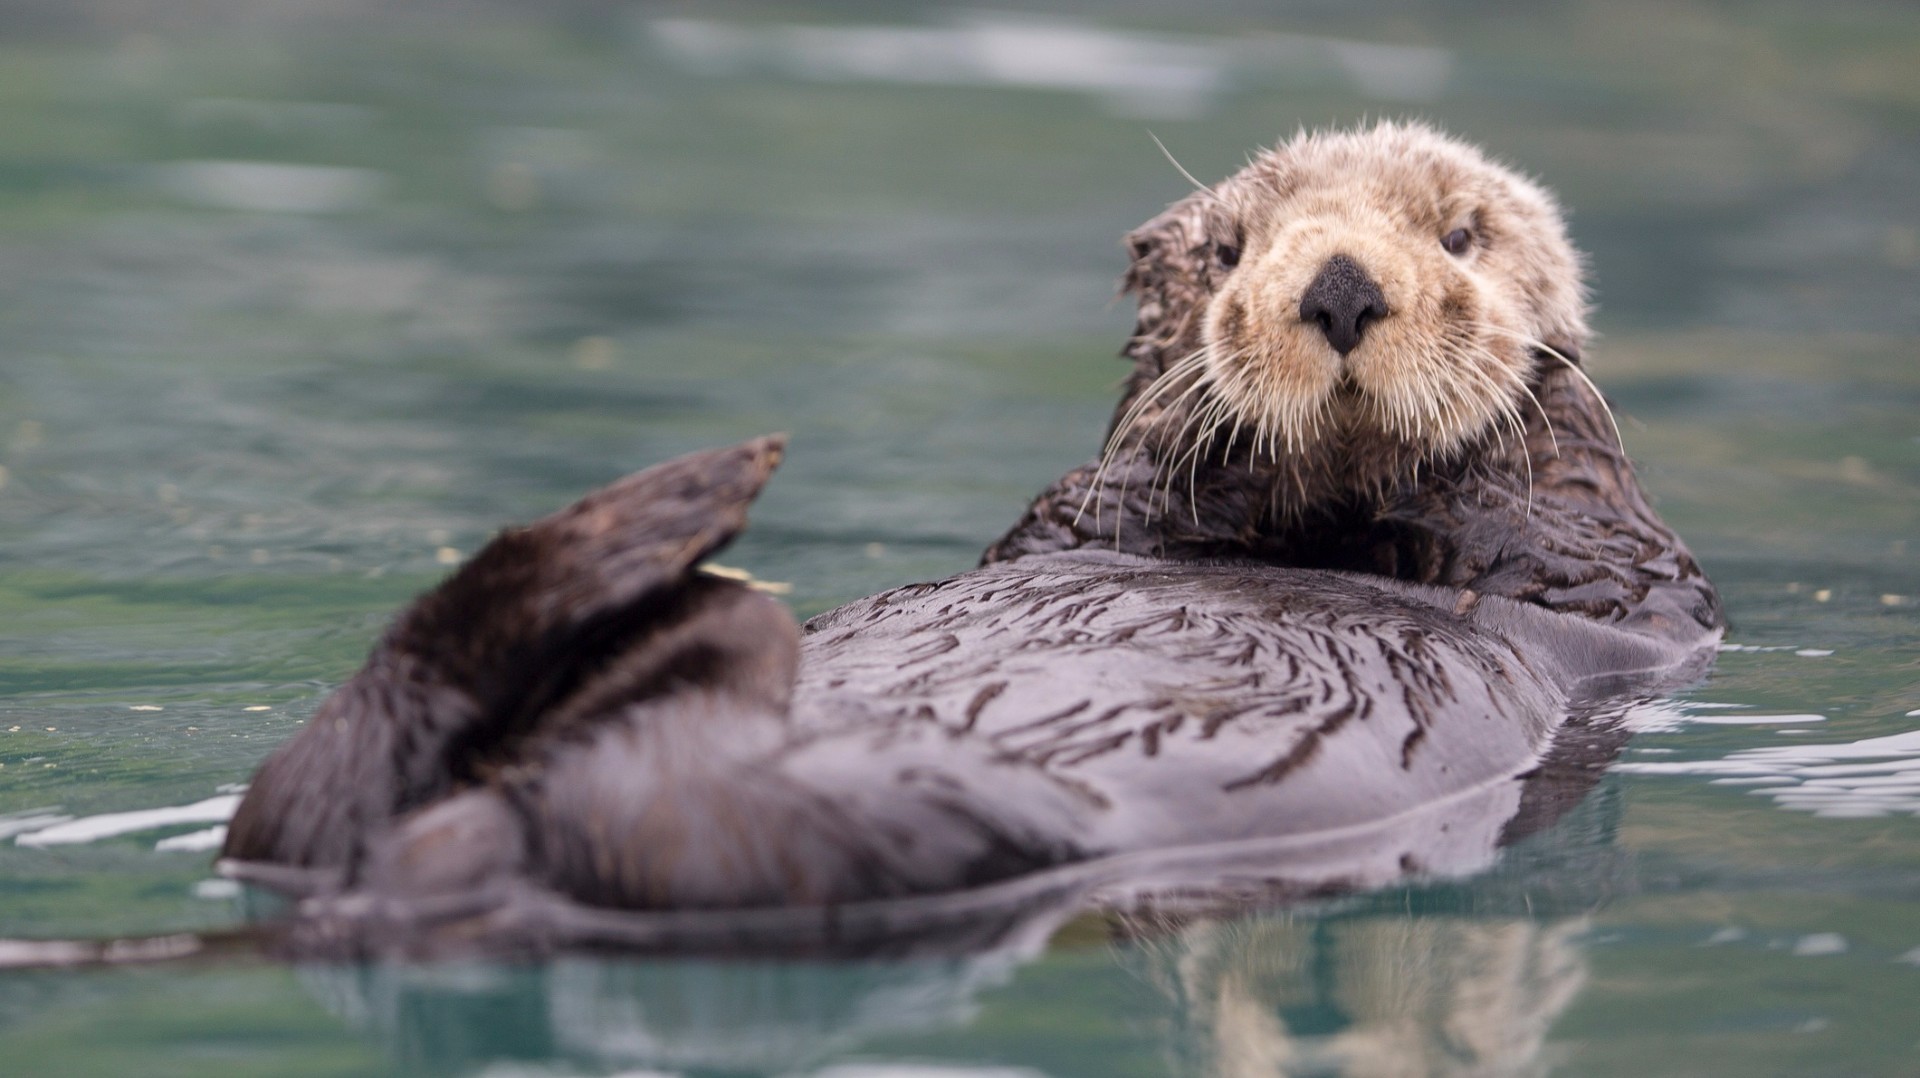 Reward in killing of sea otters near Santa Cruz | abc10.com